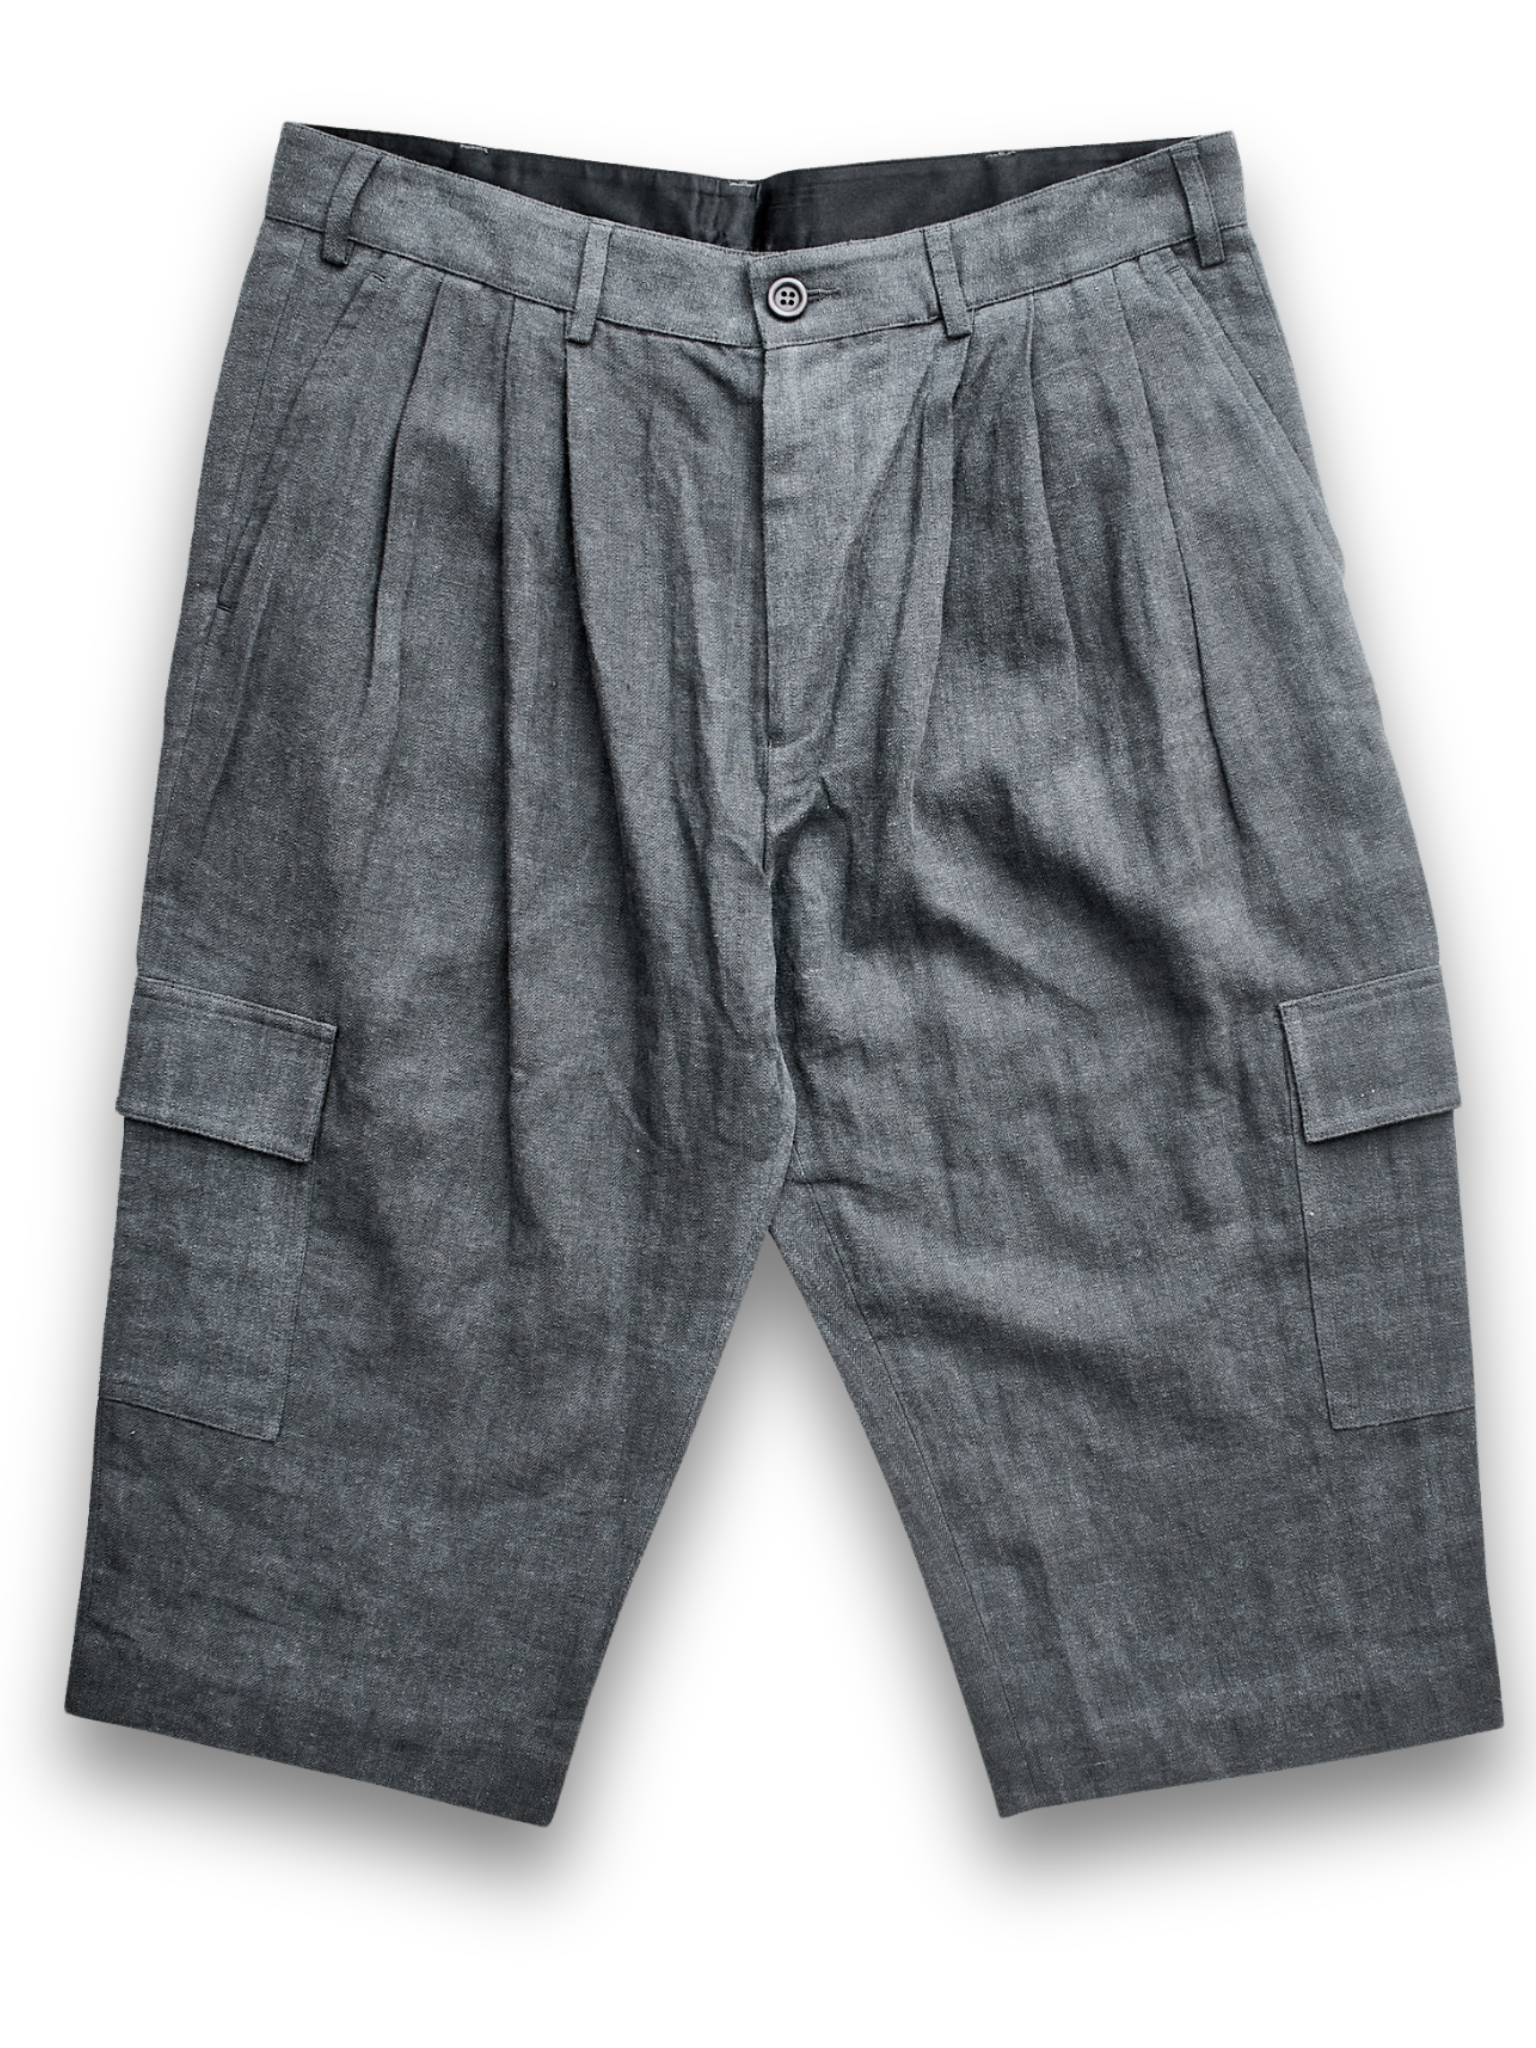 Military Grey Cargo Shorts with Pockets